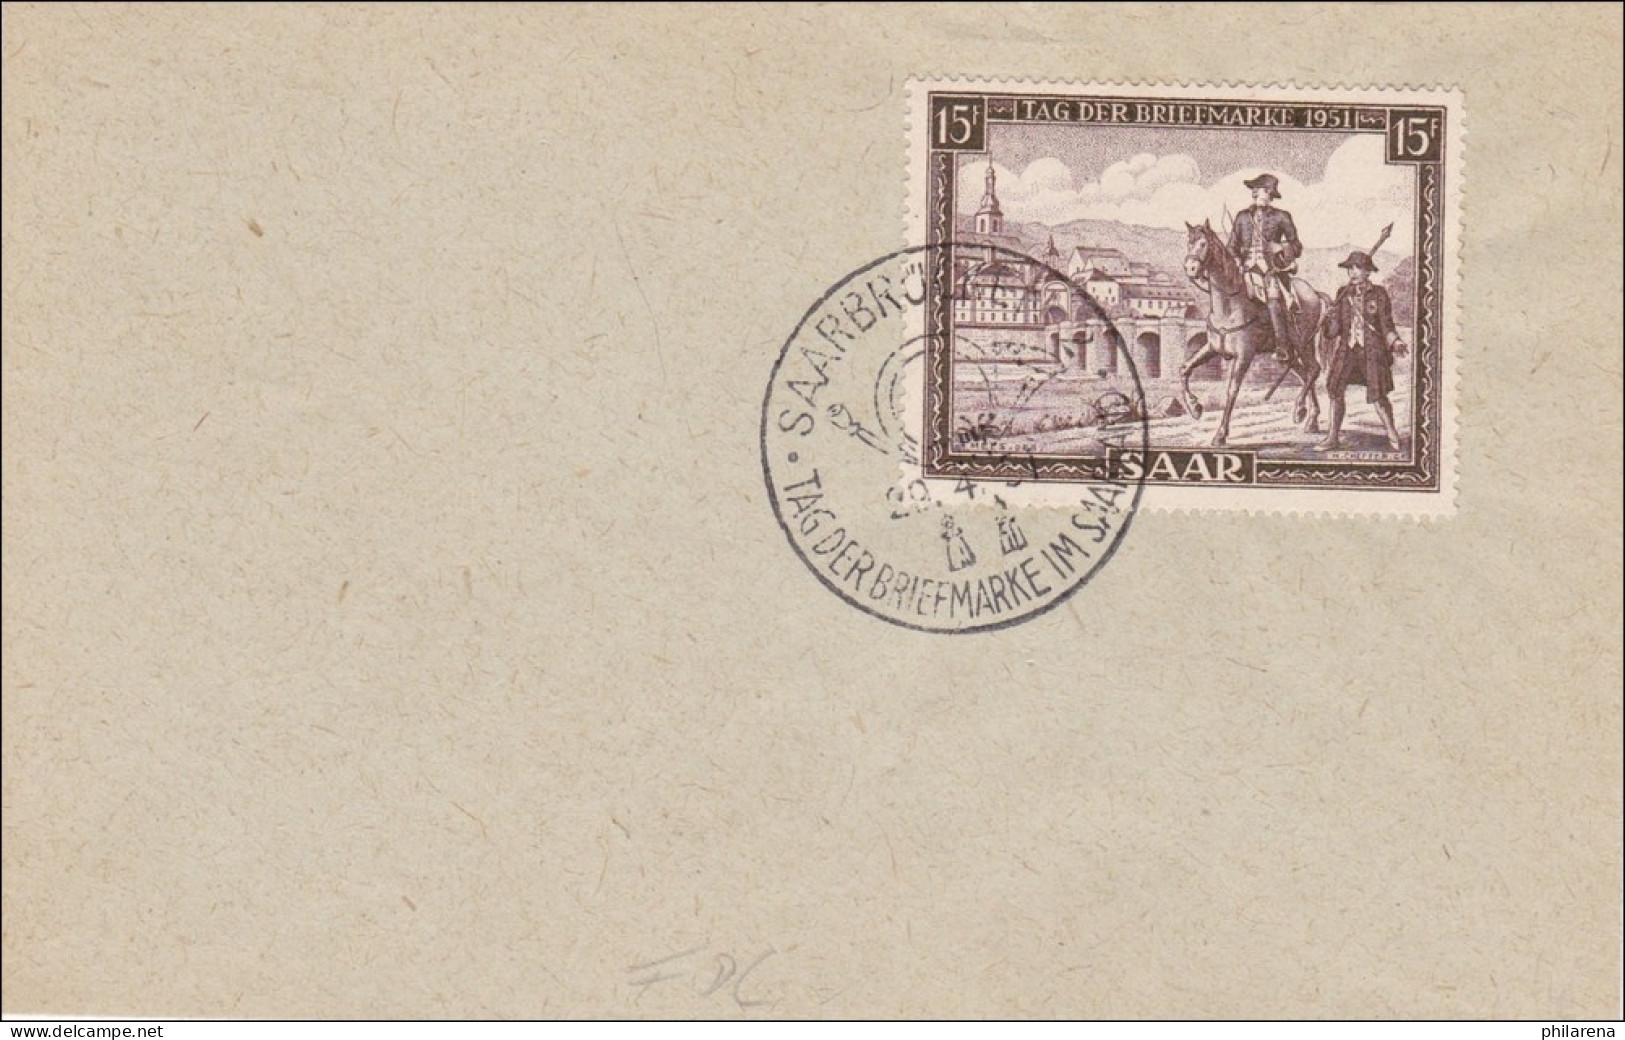 Saar: Saarbrücken Tag Der Briefmarke 1951, FDC - Lettres & Documents